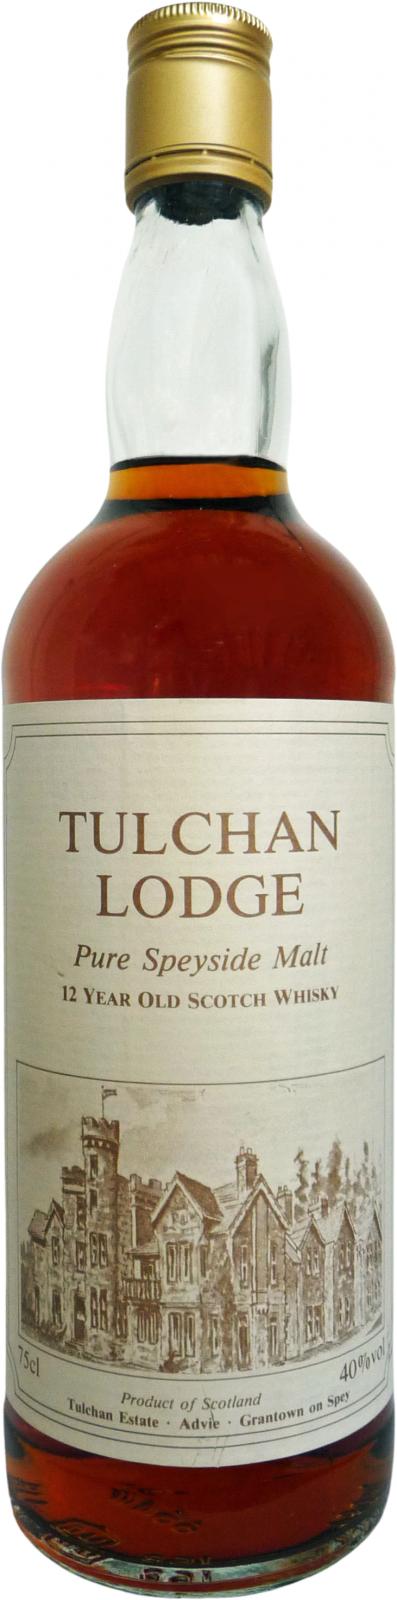 Tulchan Lodge 12yo Pure Speyside Malt Tulchan Estate Advie Grantown of Spey 40% 750ml